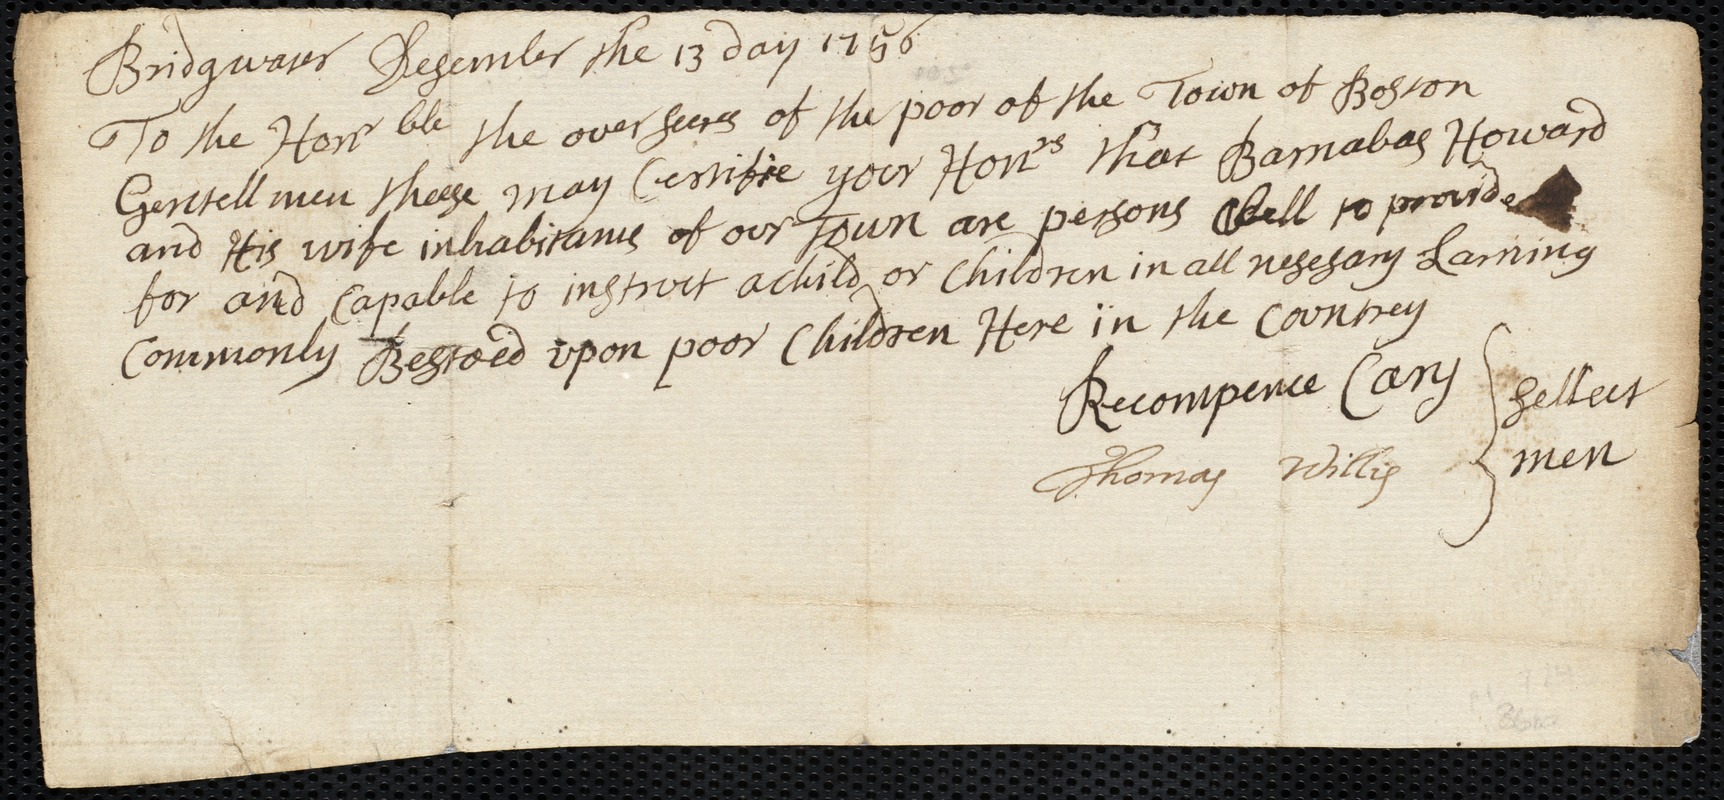 Robert Marchie [Merchies] indentured to apprentice with Barnabas Howard of Bridgewater, 17 February 1757